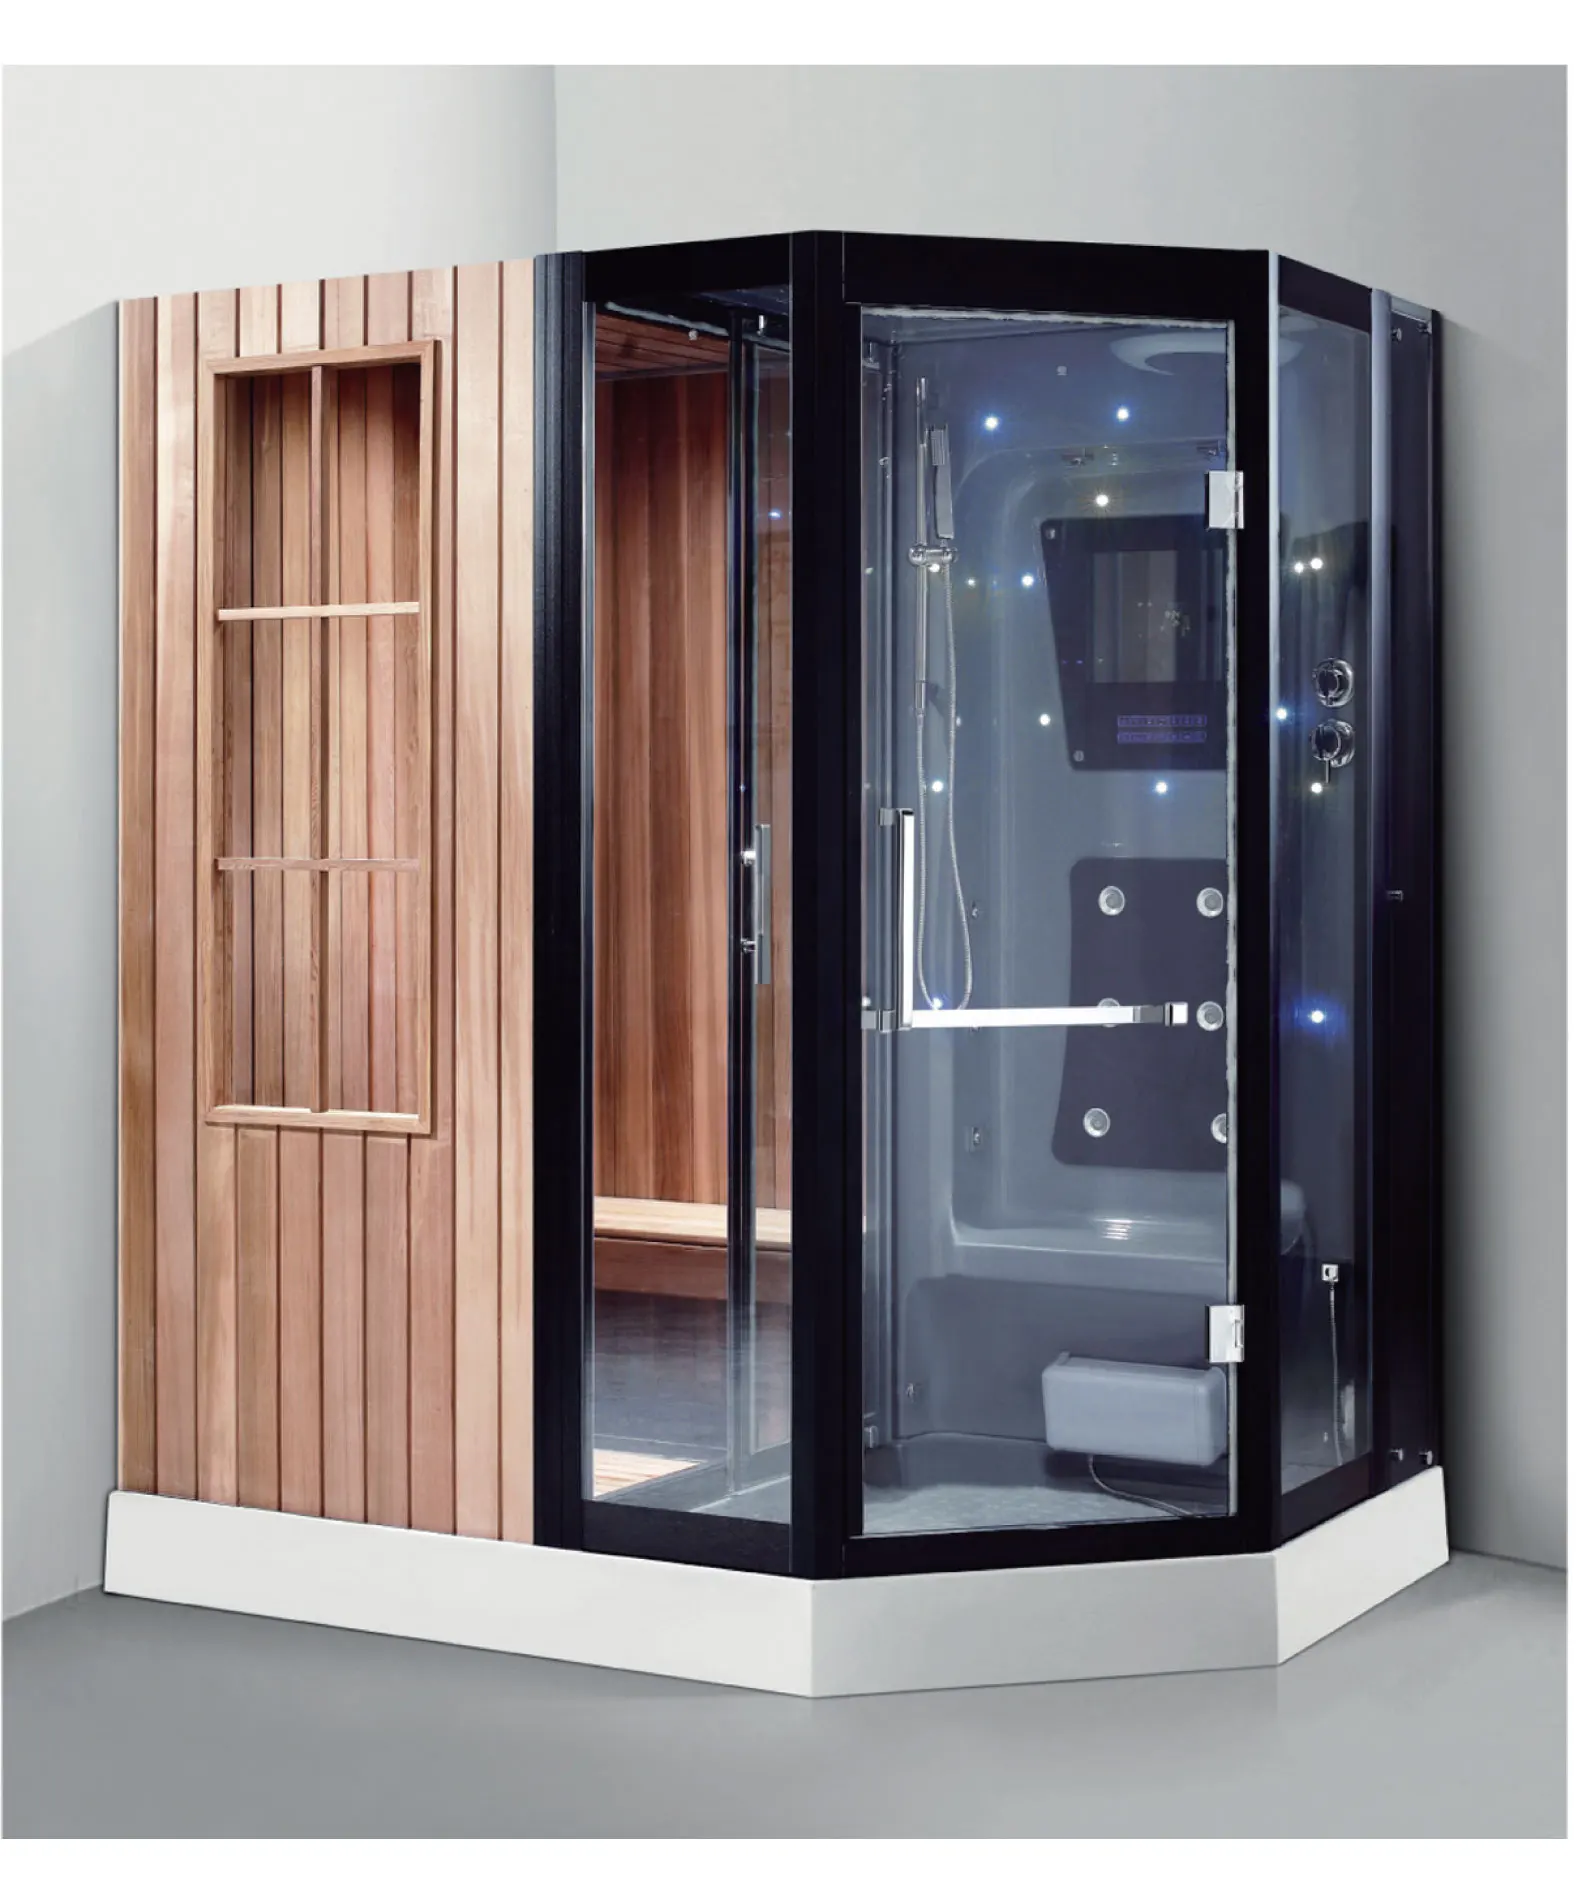 2 Person Indoor Luxury Shower Cabin Steam And Sauna Combination Room